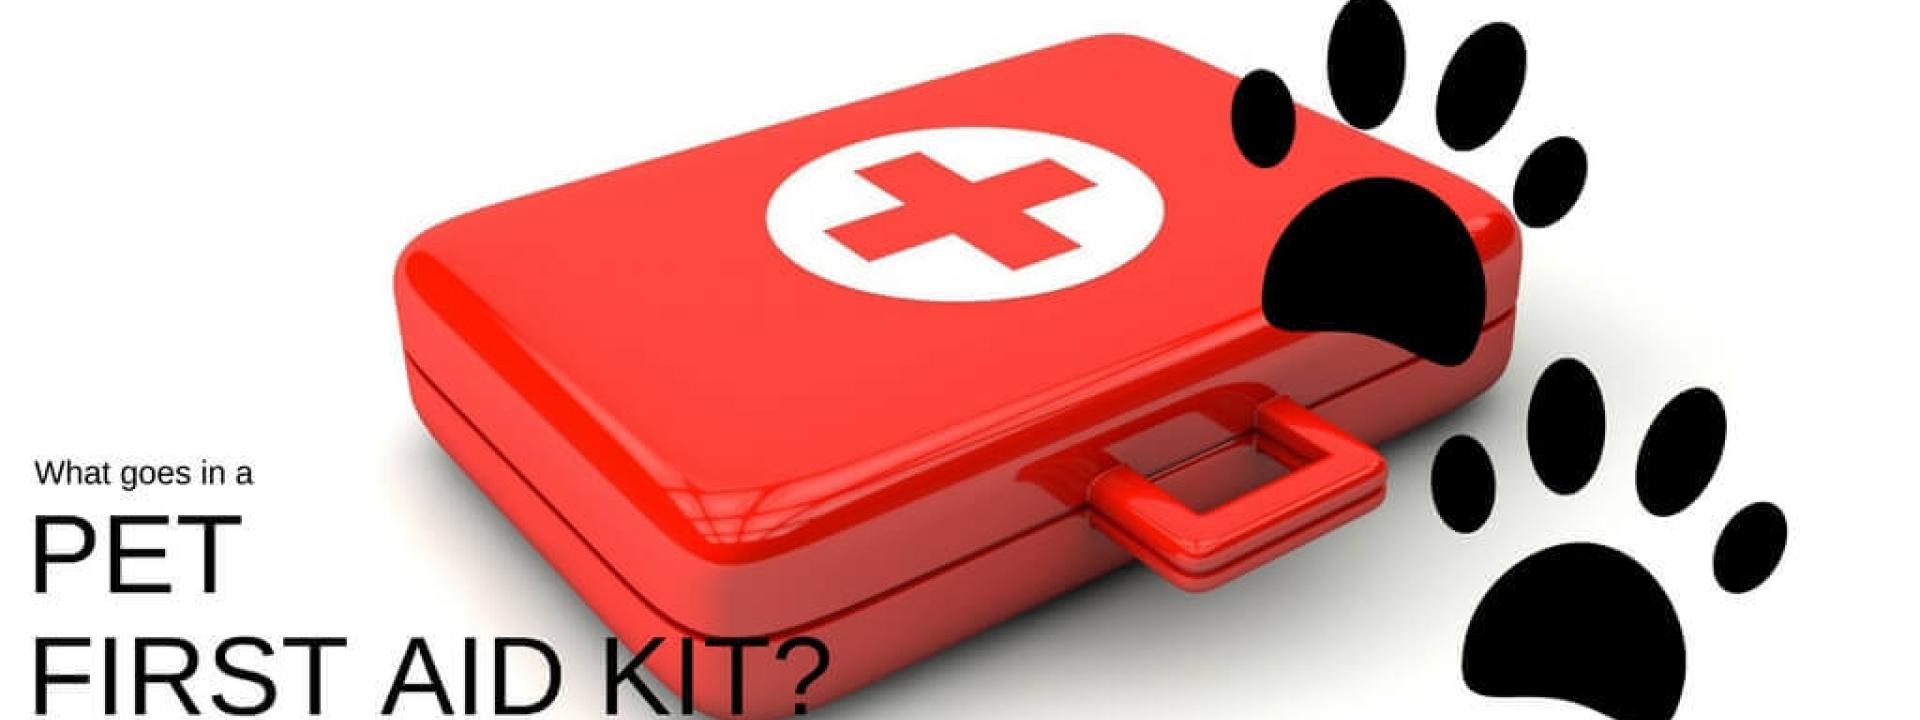 pet-first-aid-kit-Blog-Header.jpg